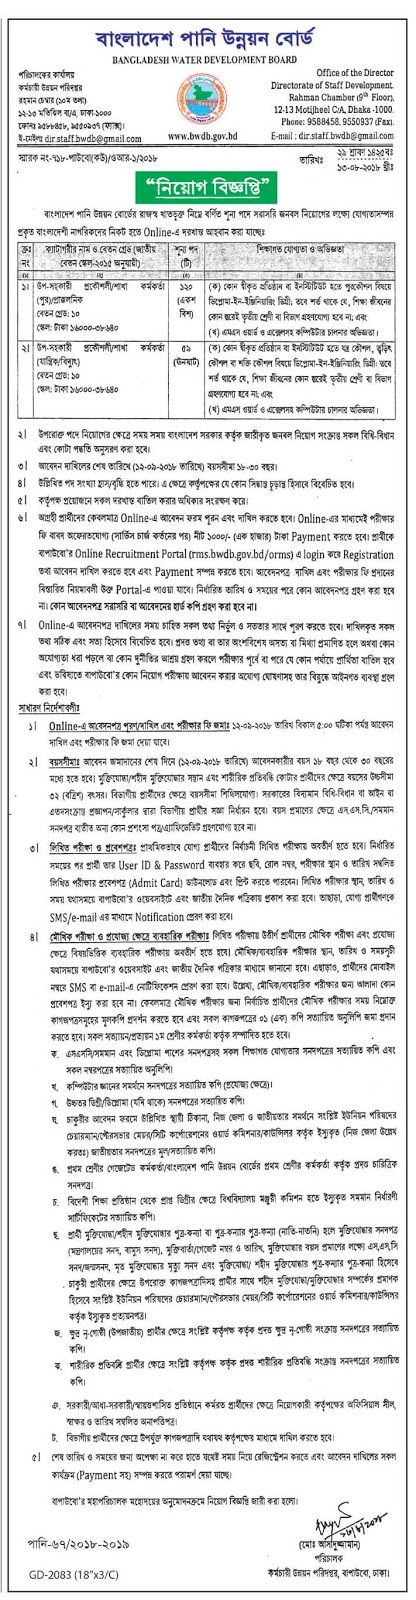 Bangladesh Water Development Board (BWDB) Job Circular 2018 